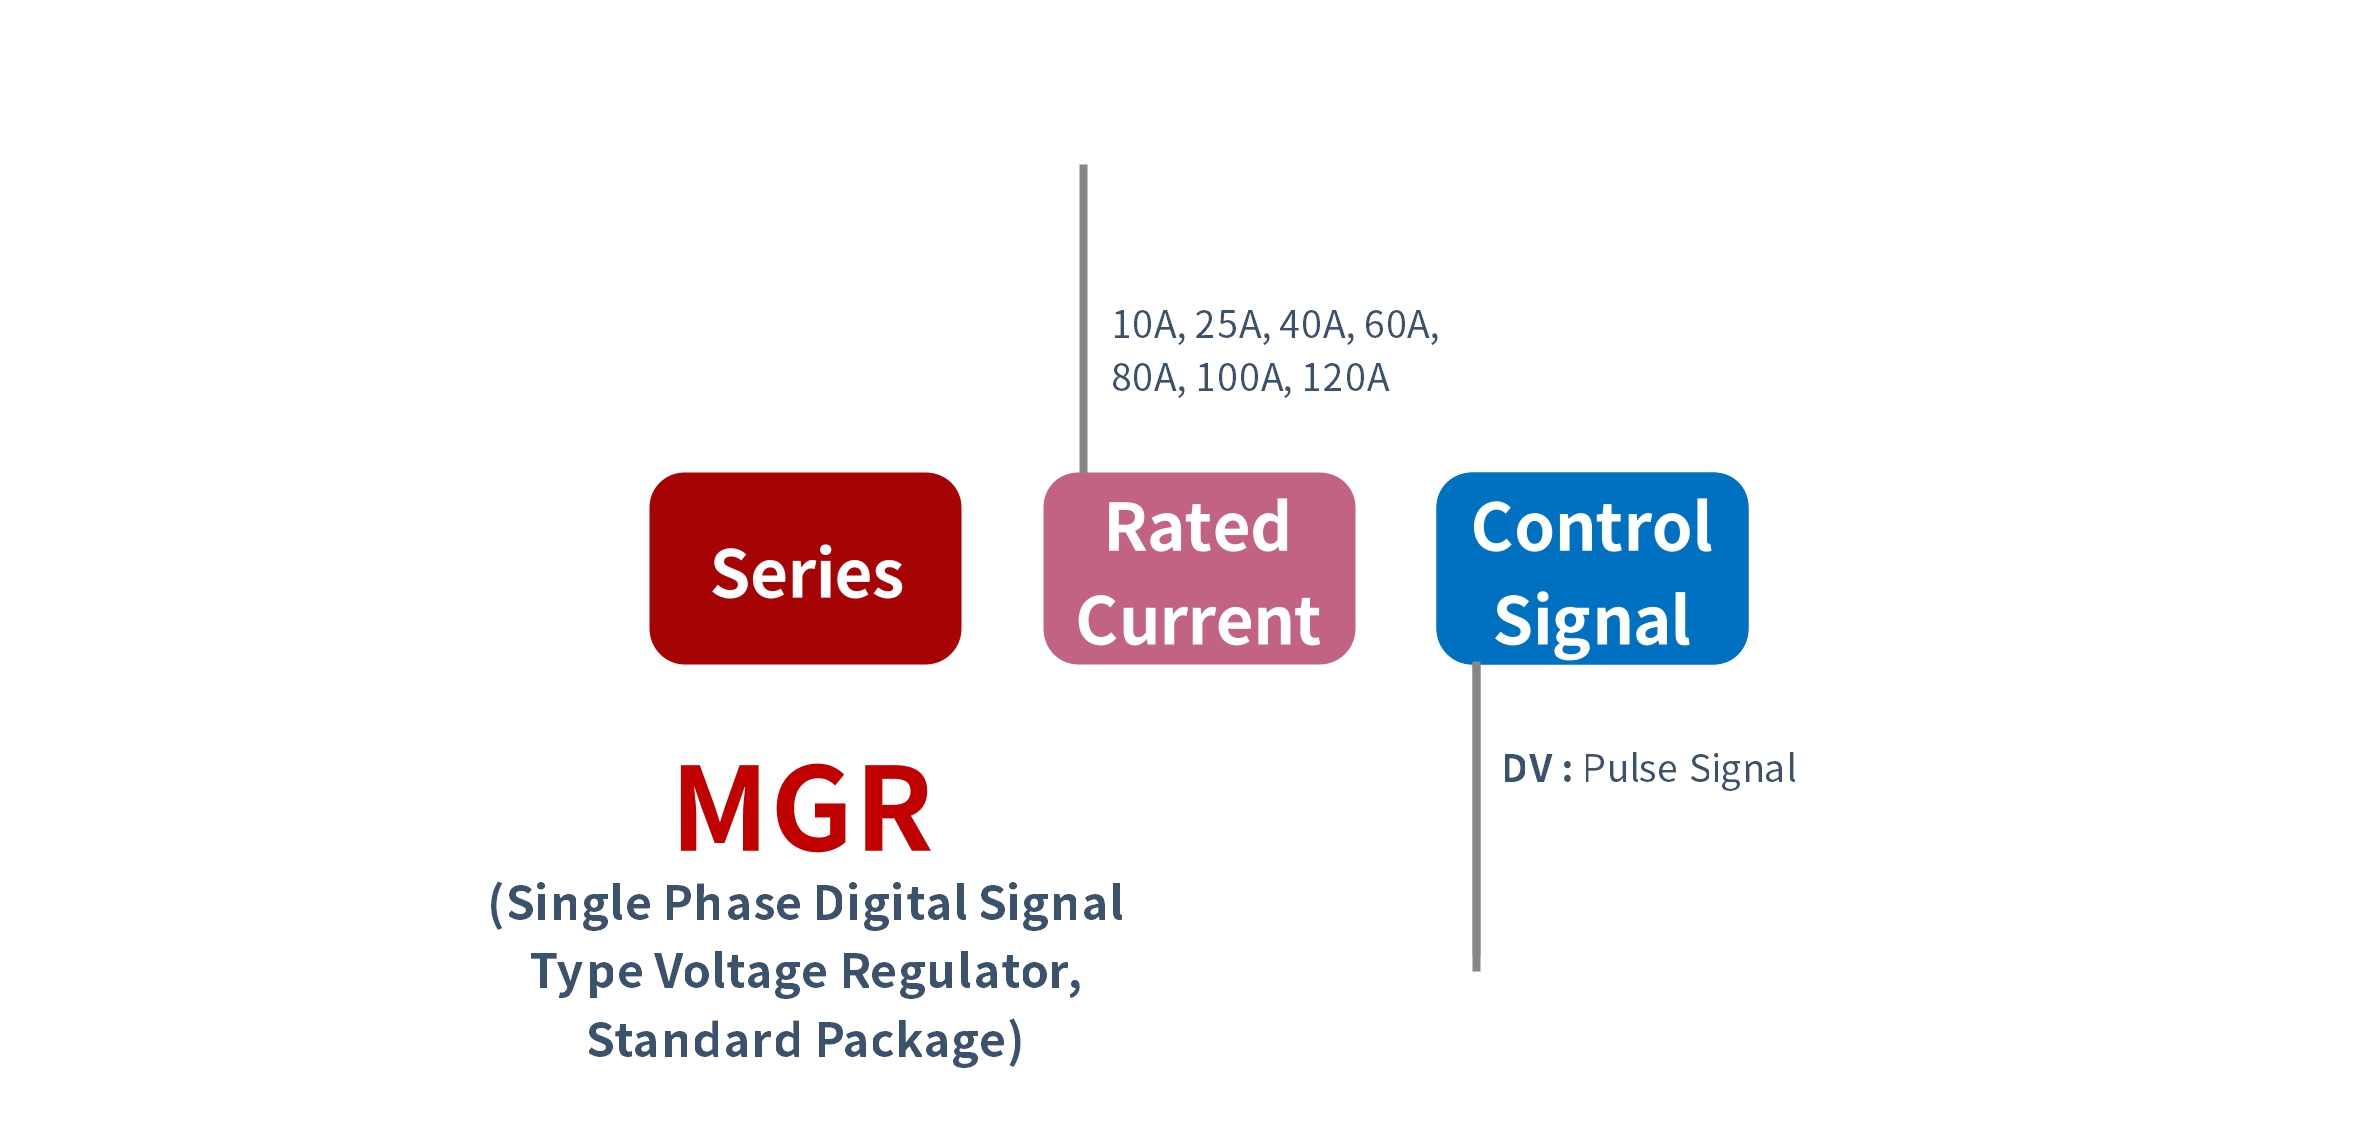 How to order MGR-DV Series Voltage Power Regulator